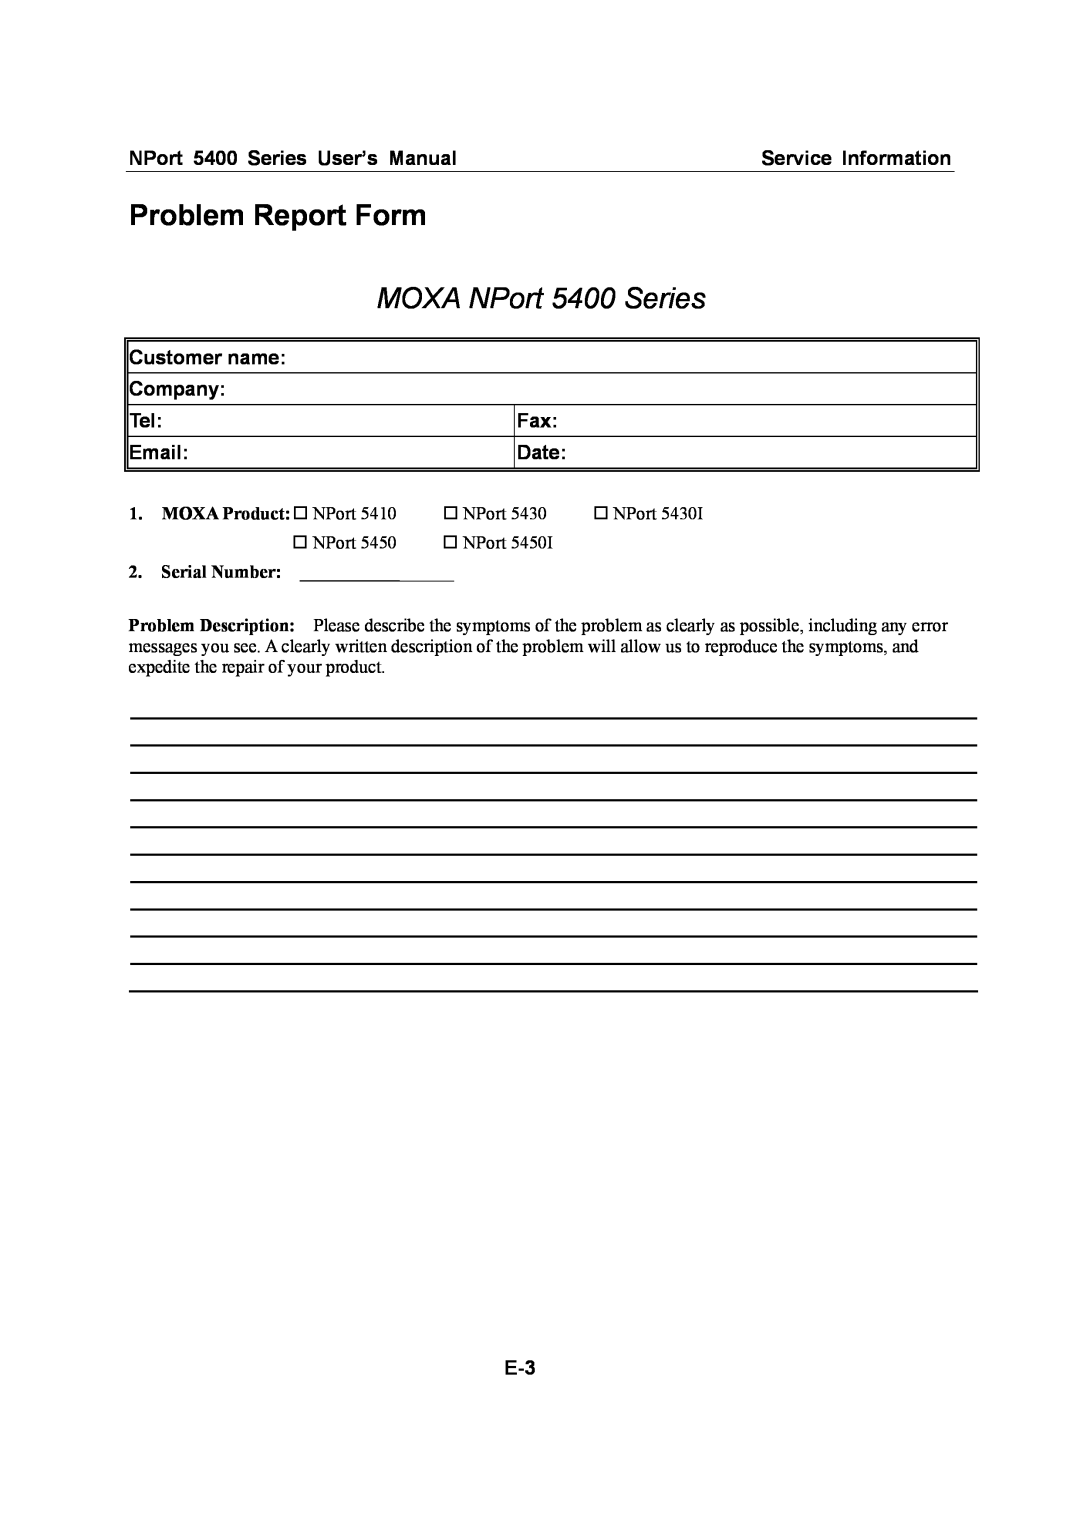 Moxa Technologies user manual Problem Report Form, MOXA NPort 5400 Series 